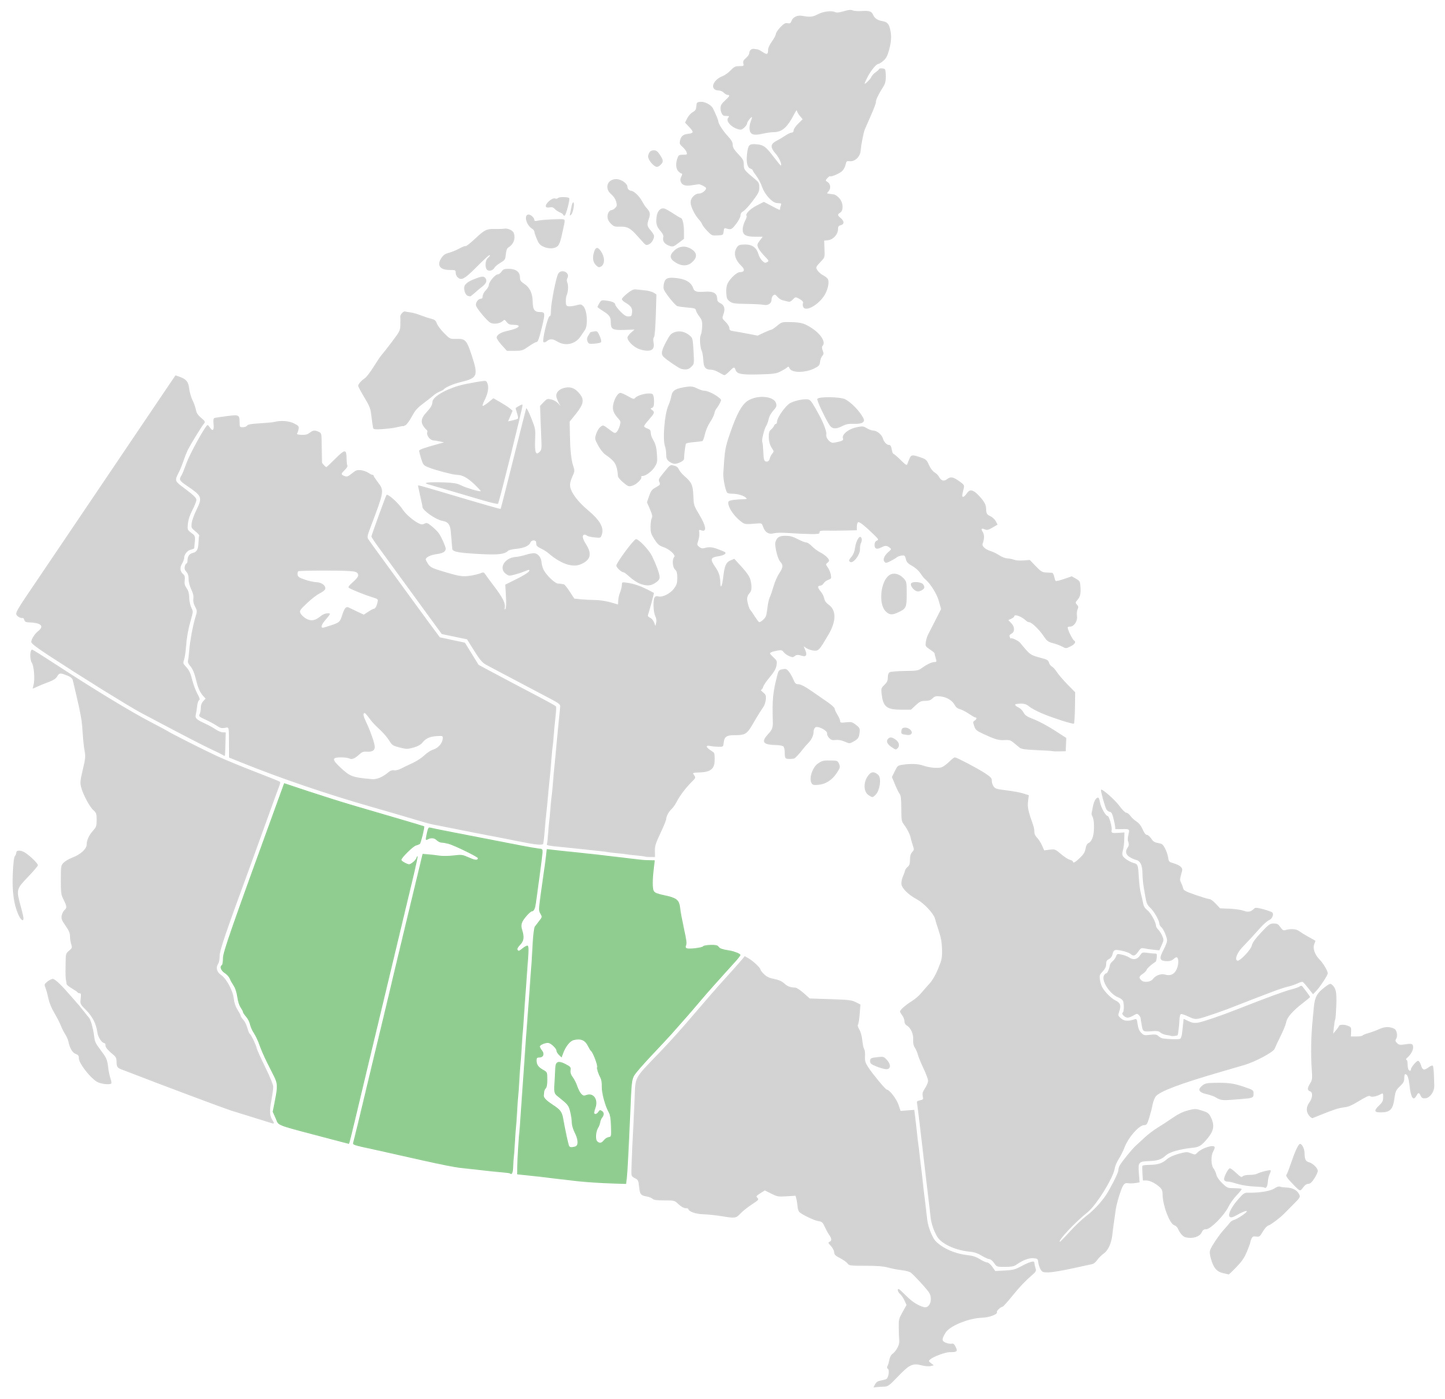 Garmin GPS Pre-Loaded with Western Canada Legal Land Location Maps (MB, SK, AB)